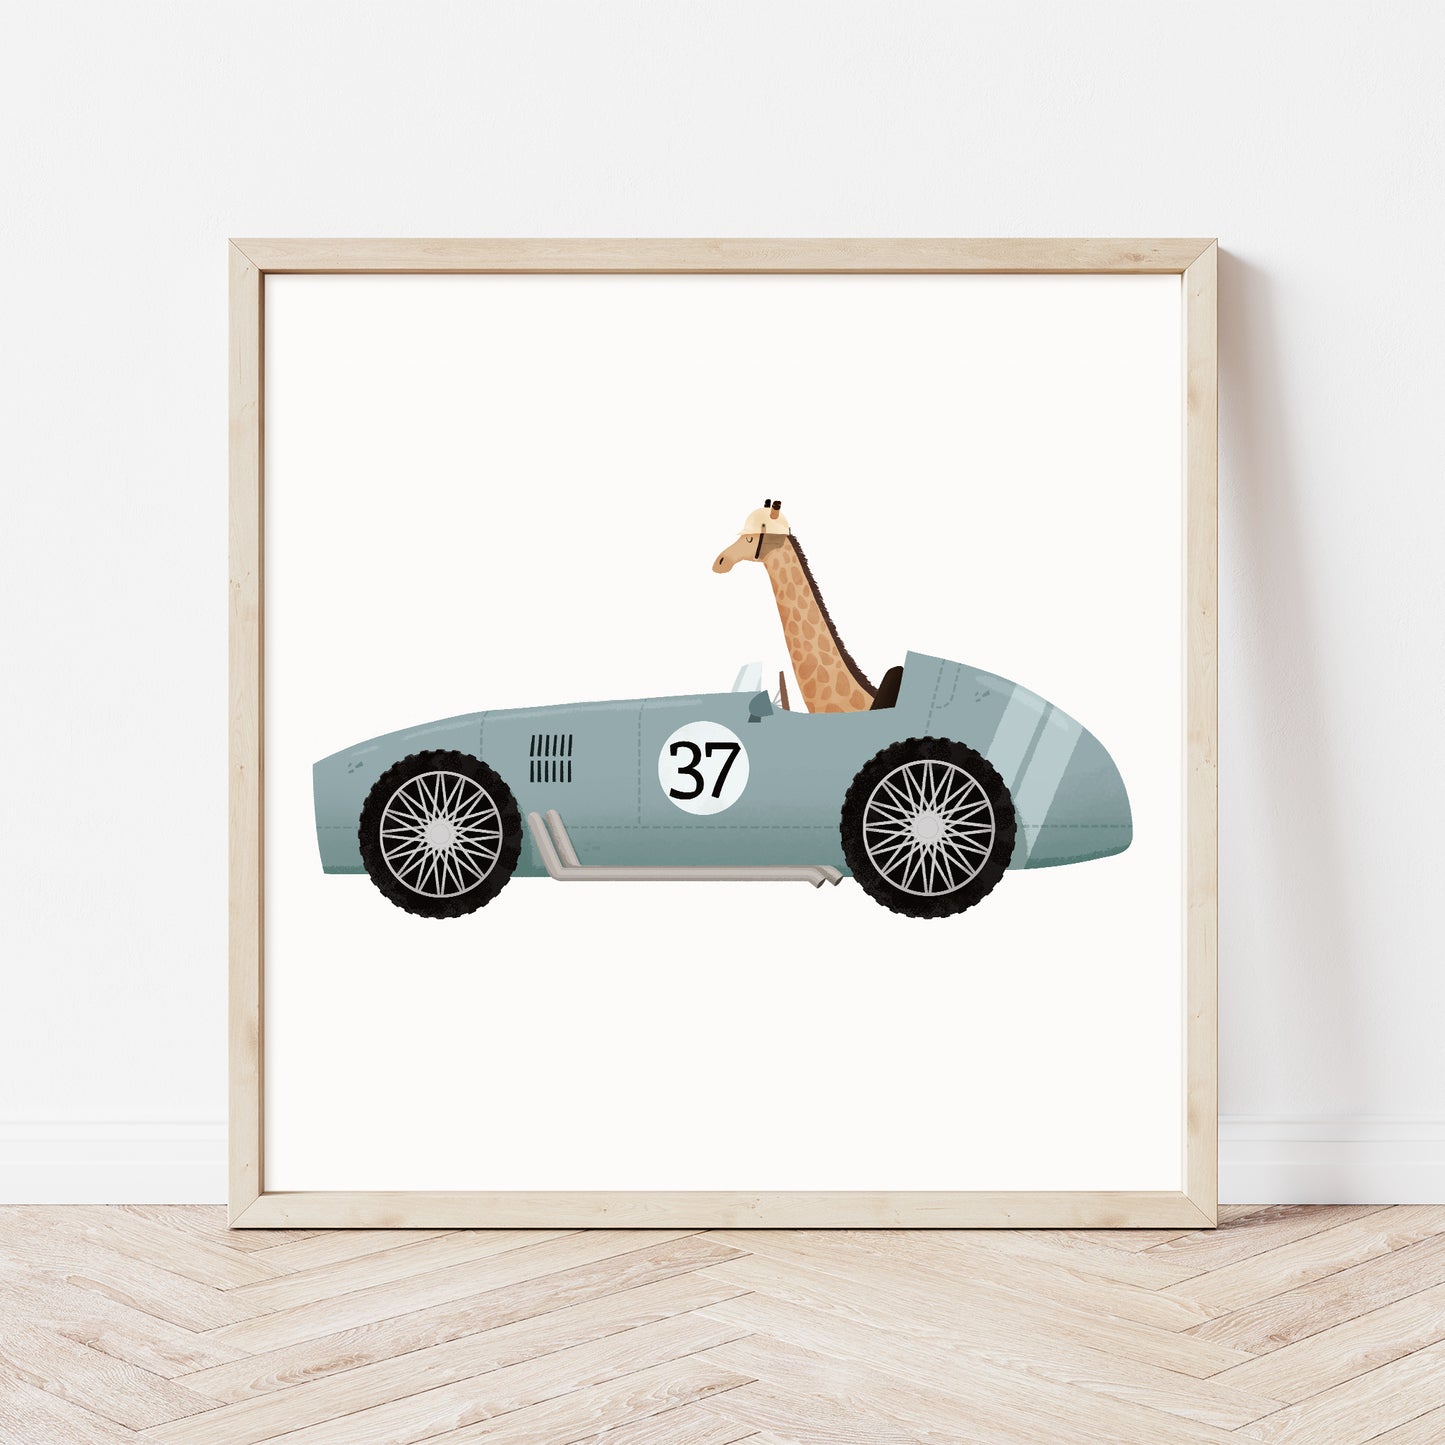 Set of six vintage racing cars prints